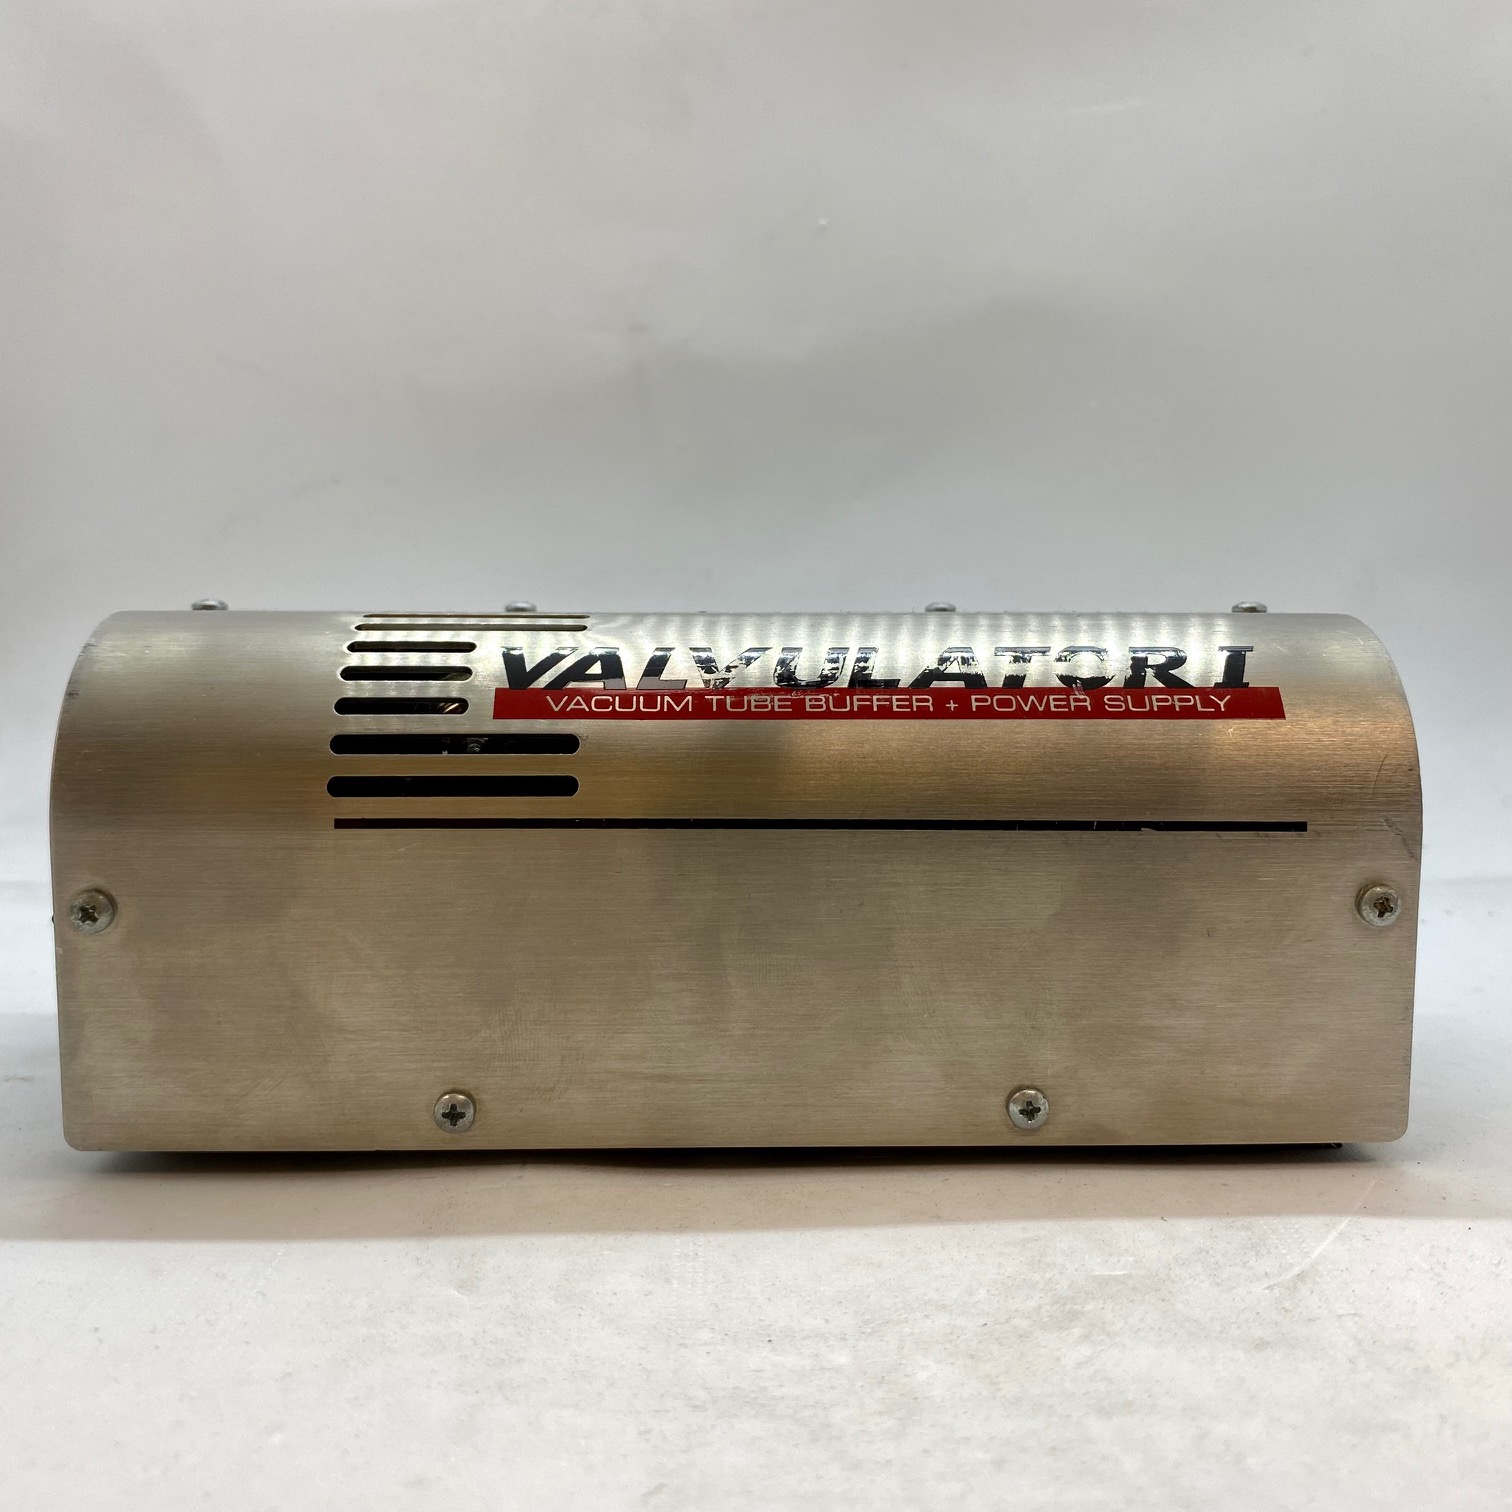 Fryette Valvulator I Vacuum Tube Buffer / Power Supply - Nickles Music